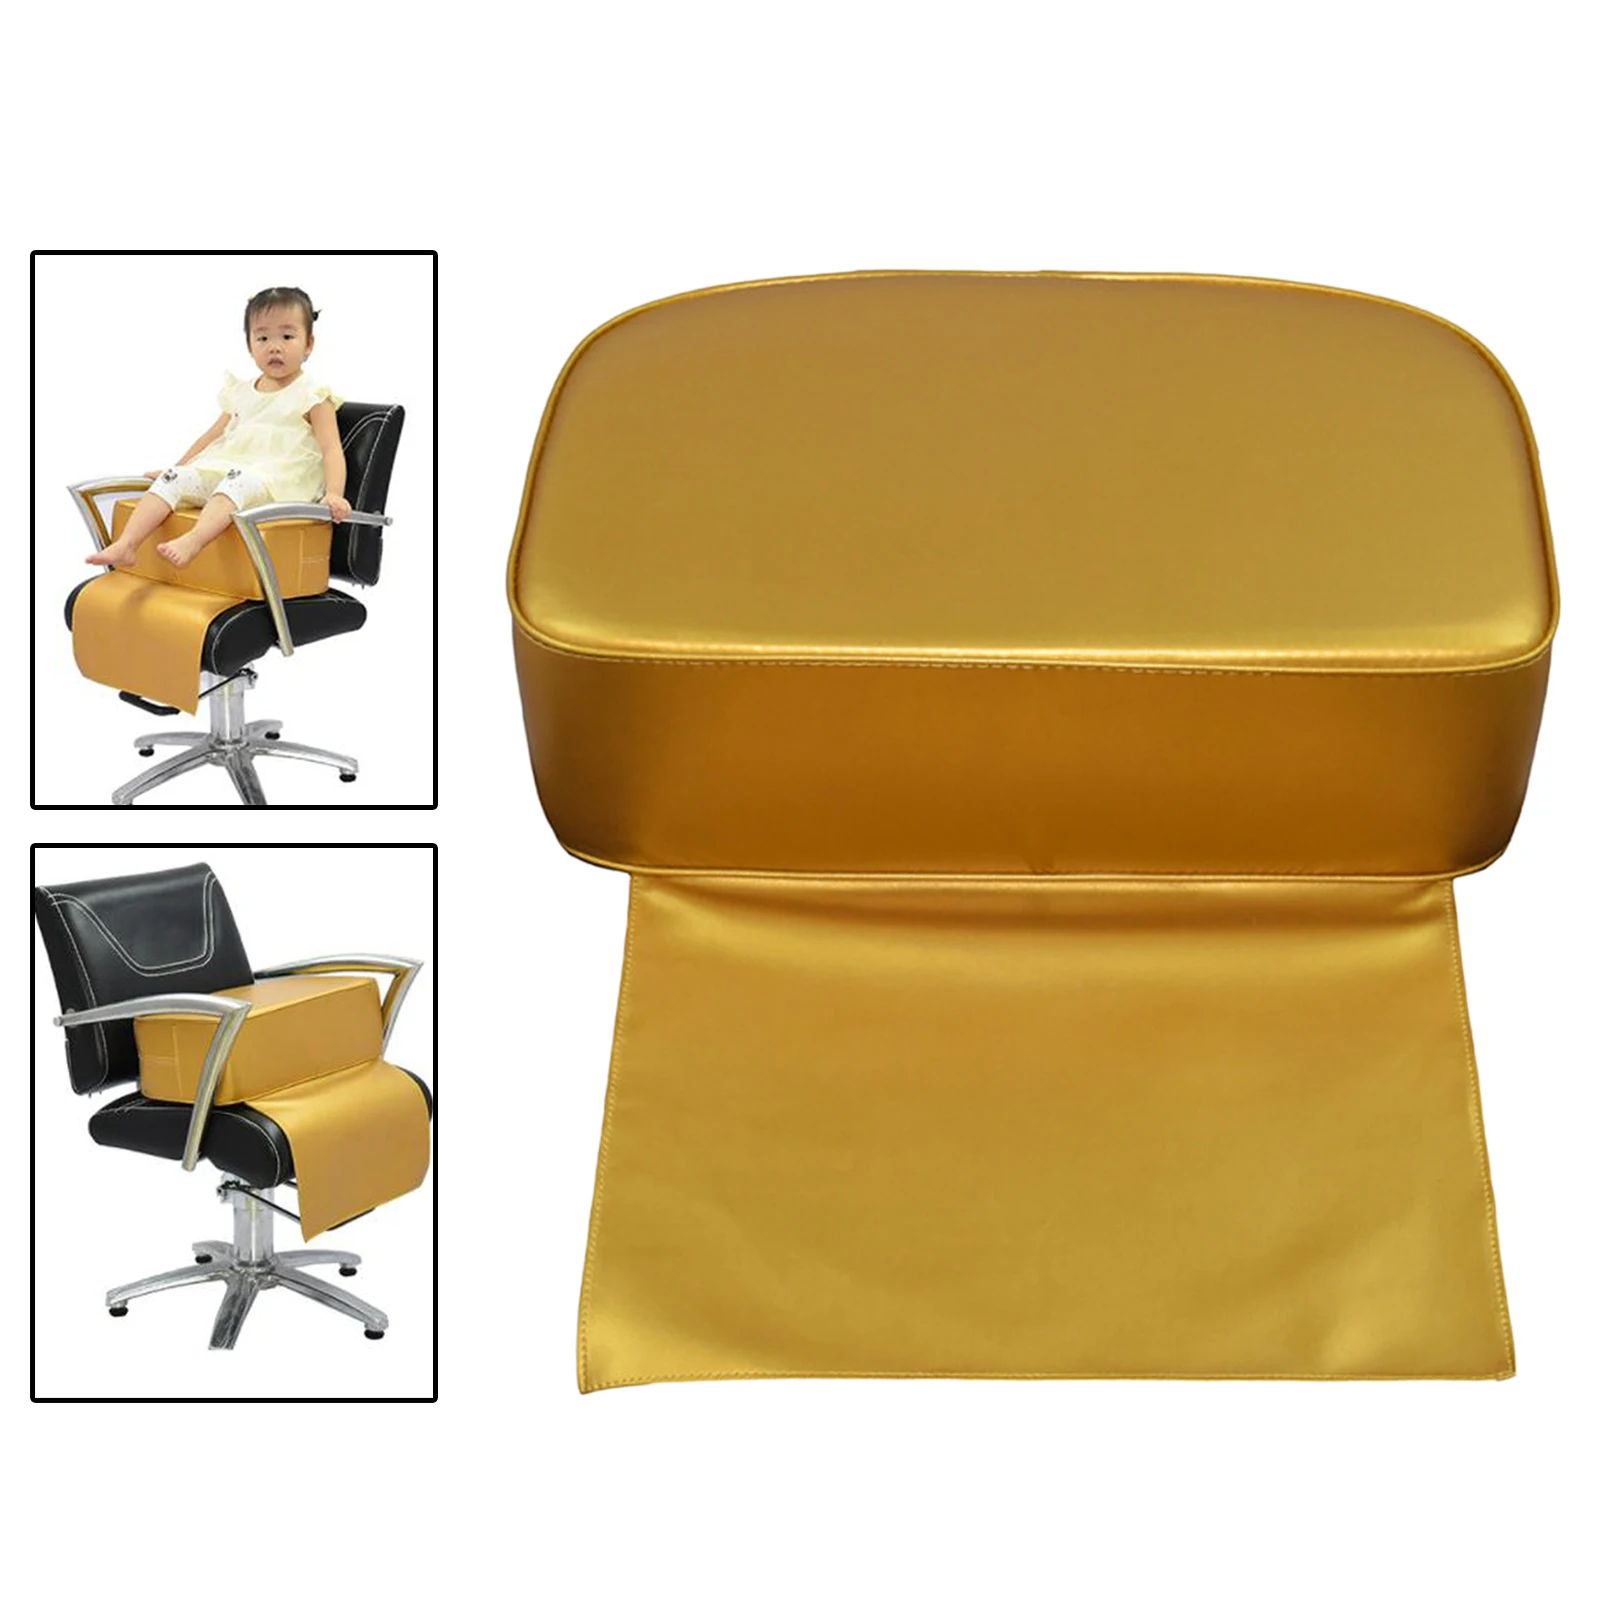 Salon Booster Seat Cushion for Child Hair Cutting, Cushion for Styling Chair, Barber Beauty Salon Spa Equipment